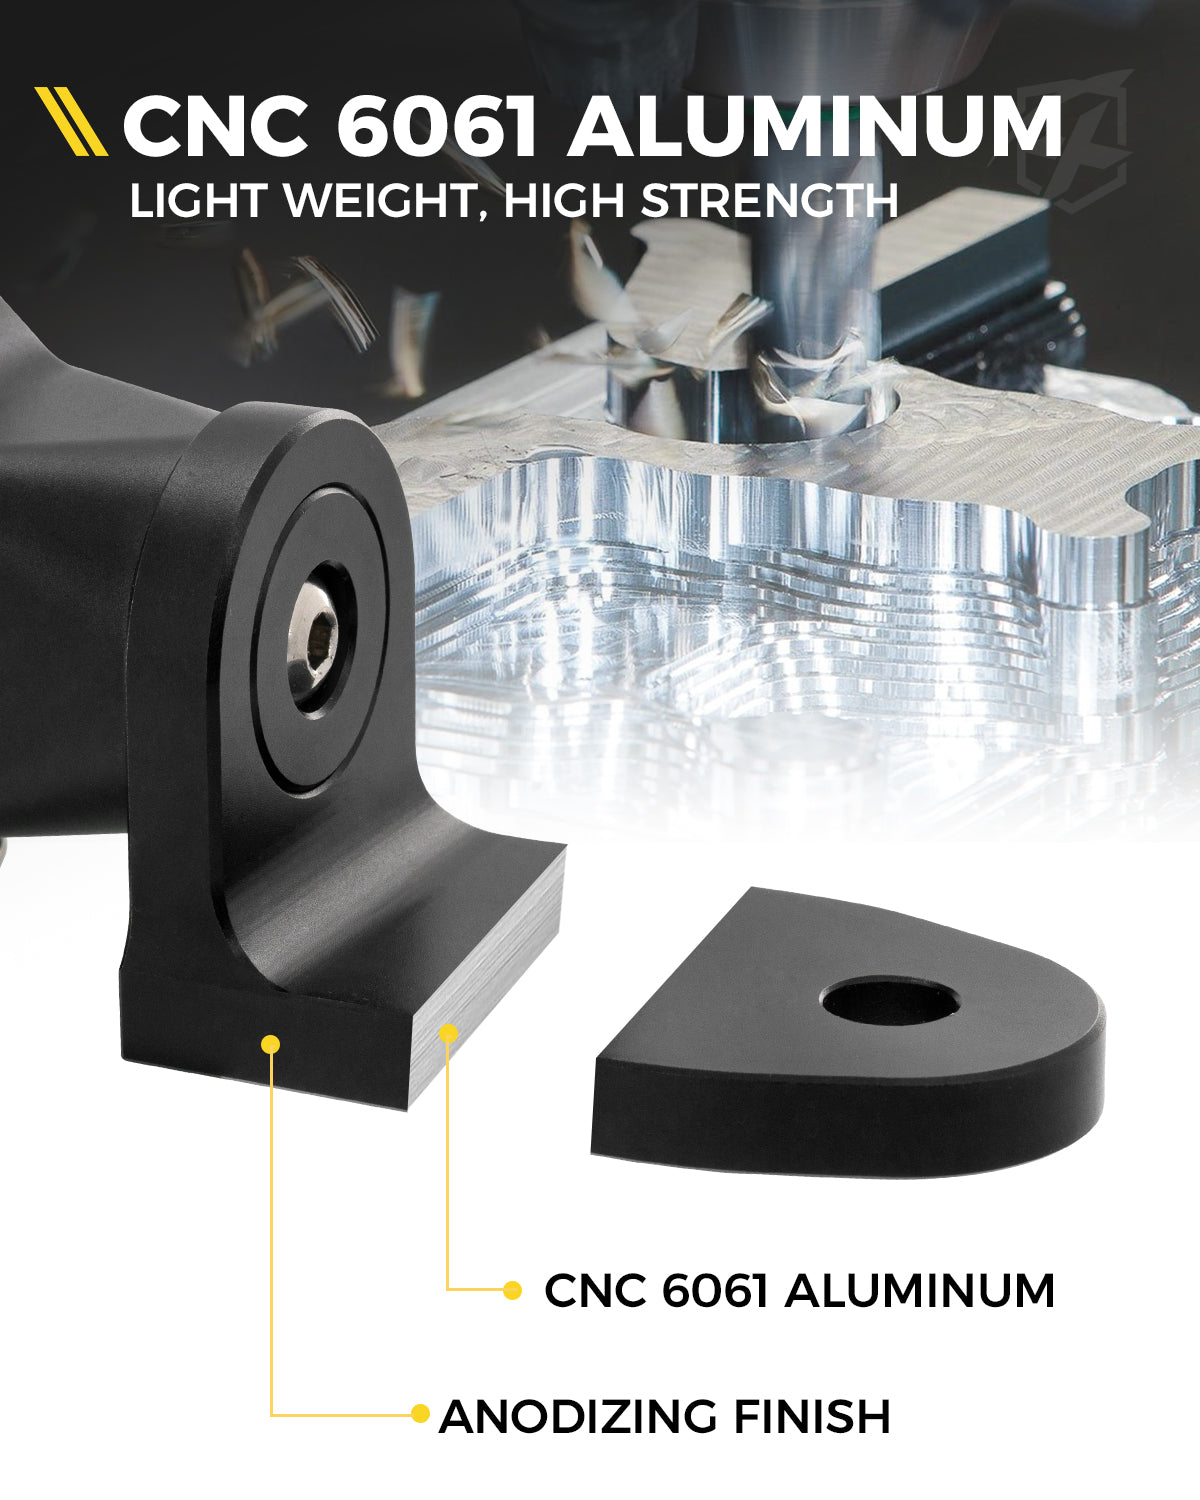 Aluminum CNC Whip Light Mount Bracket with 360° Rotation Capability